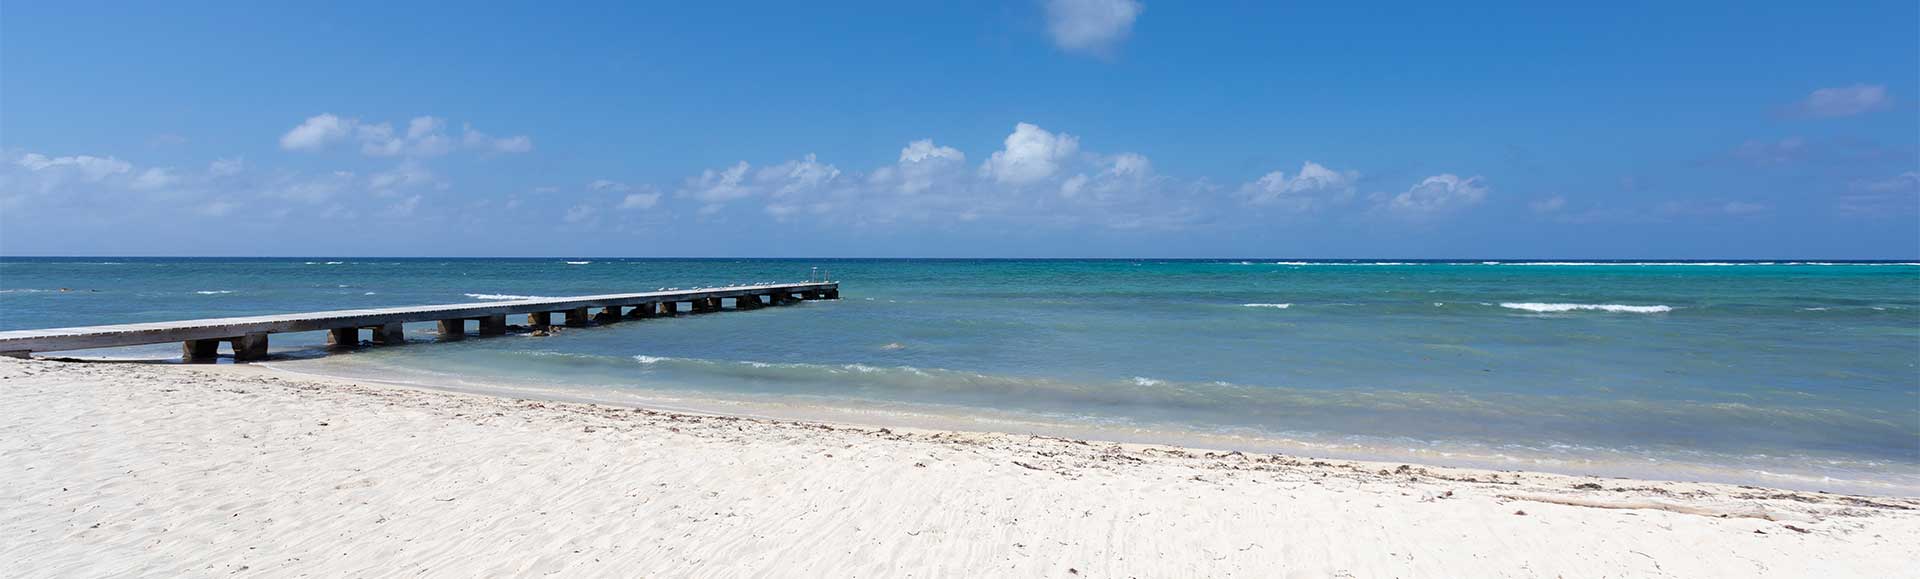 West Bay, Grand Cayman